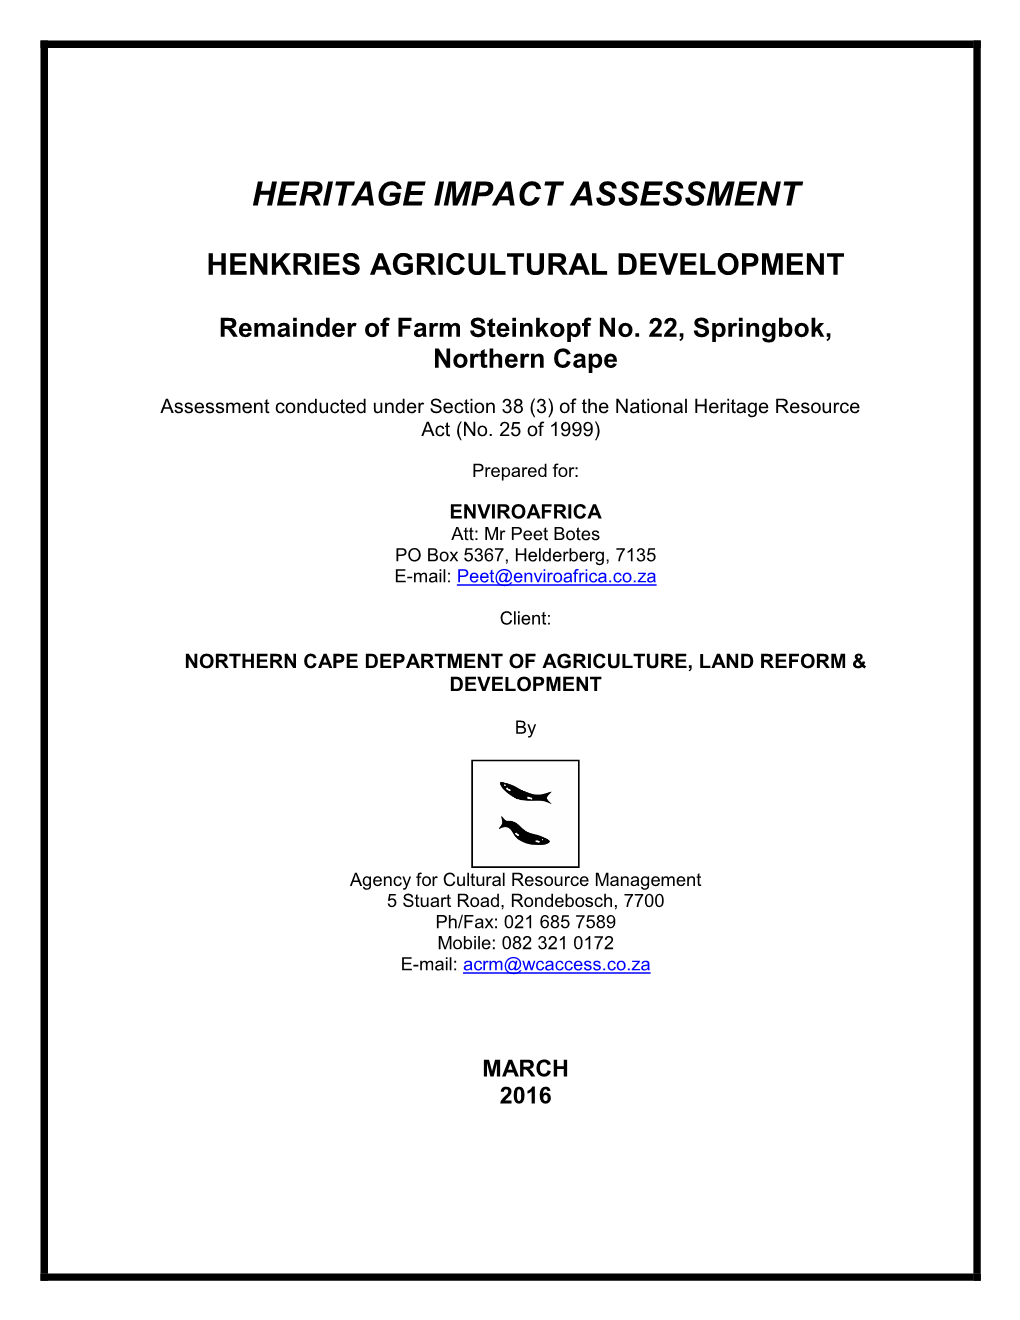 Heritage Impact Assessment Henkries